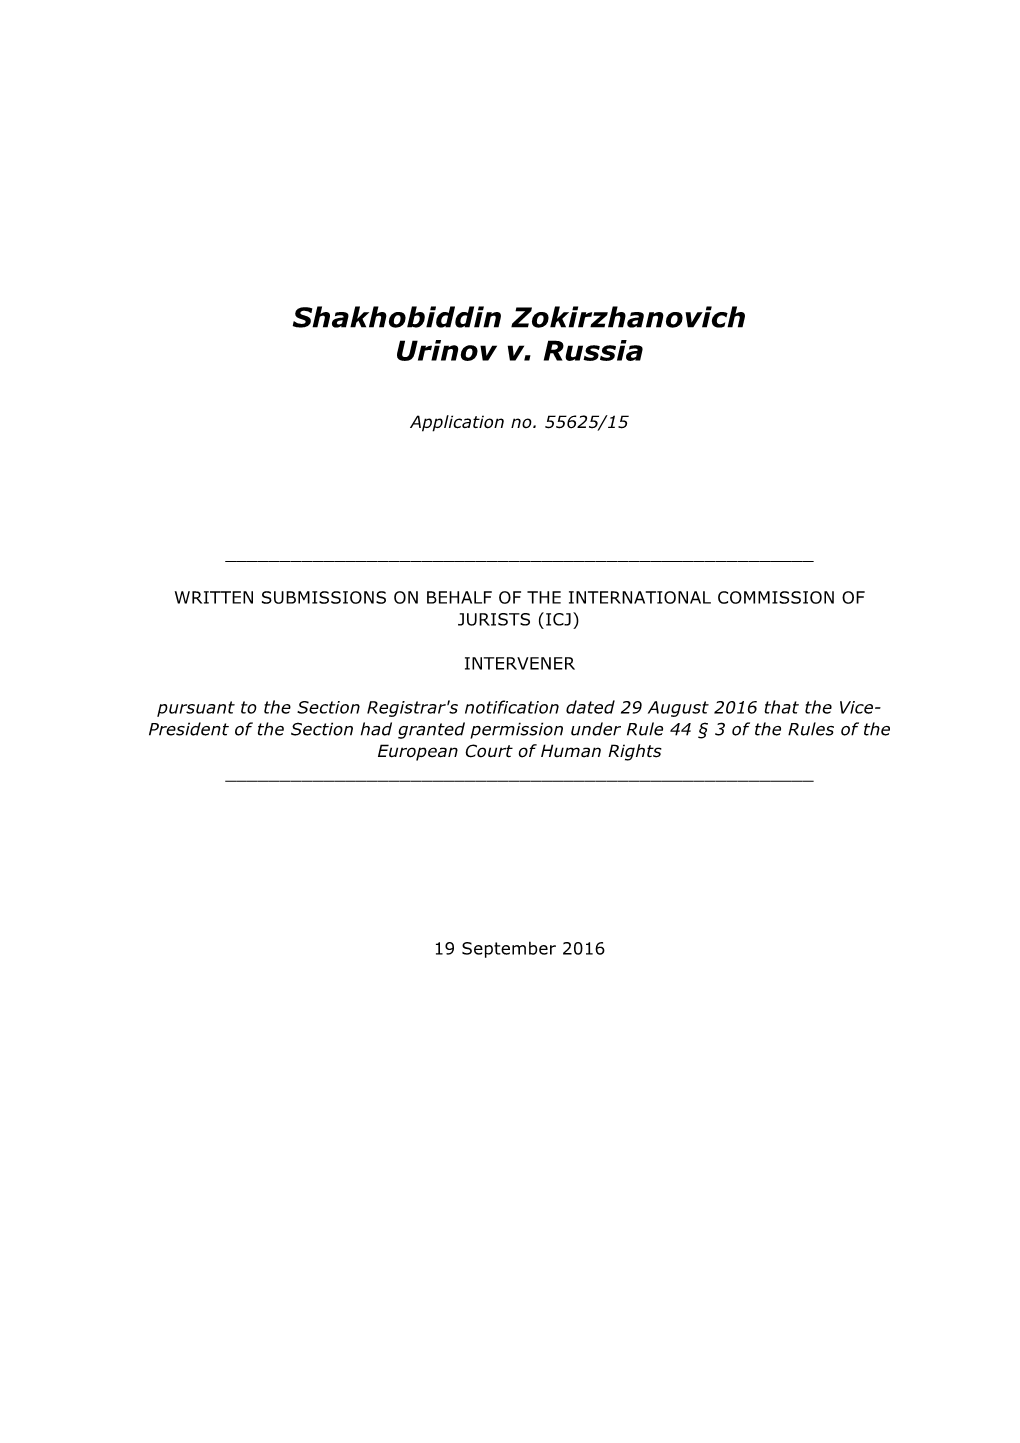 Shakhobiddin Zokirzhanovich Urinov V. Russia